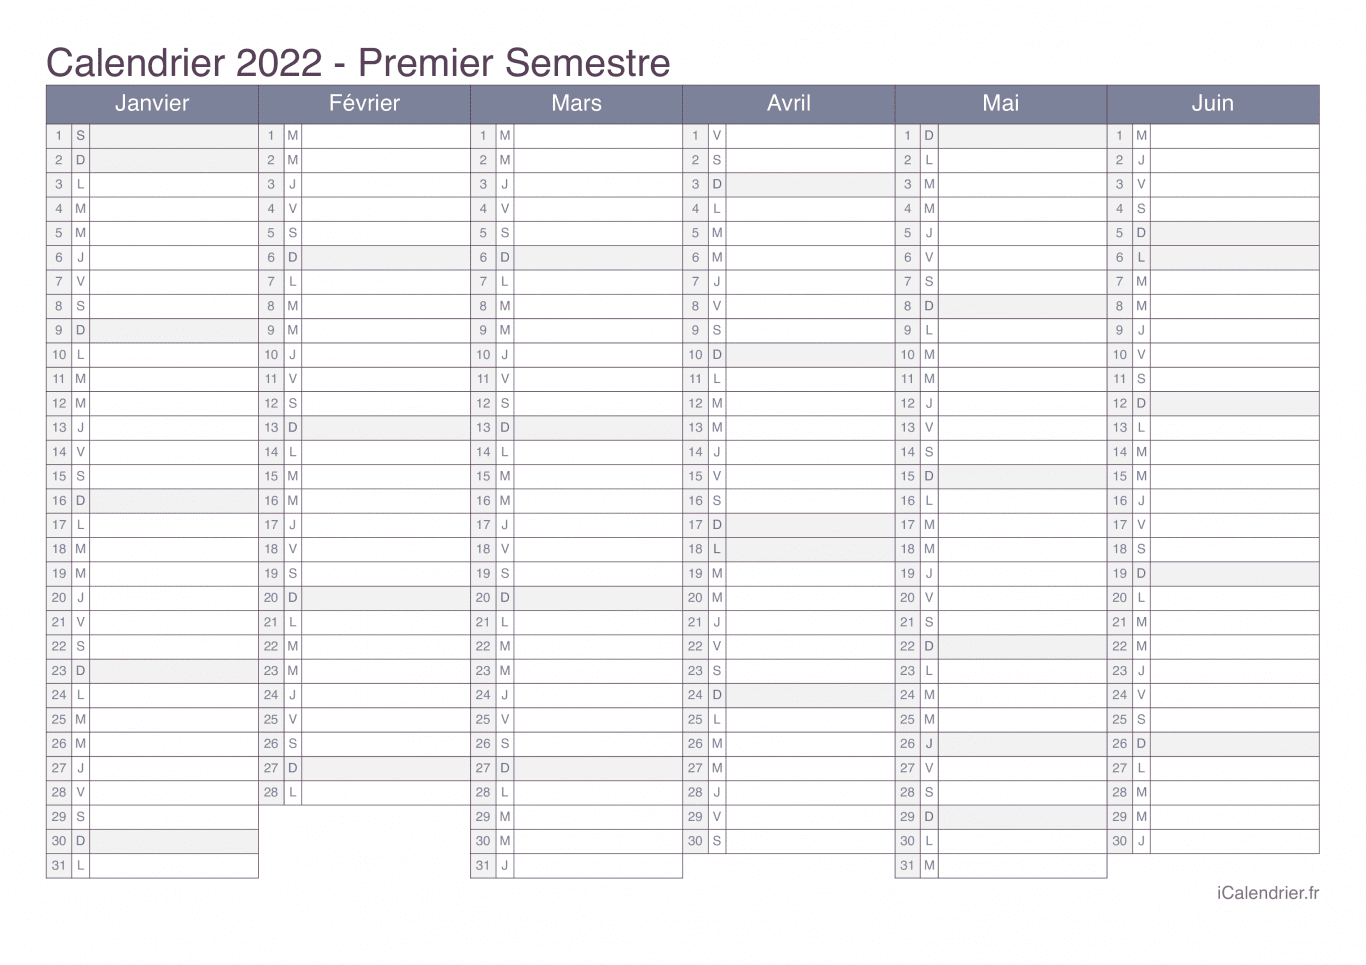 Calendrier par semestre 2022 - Office